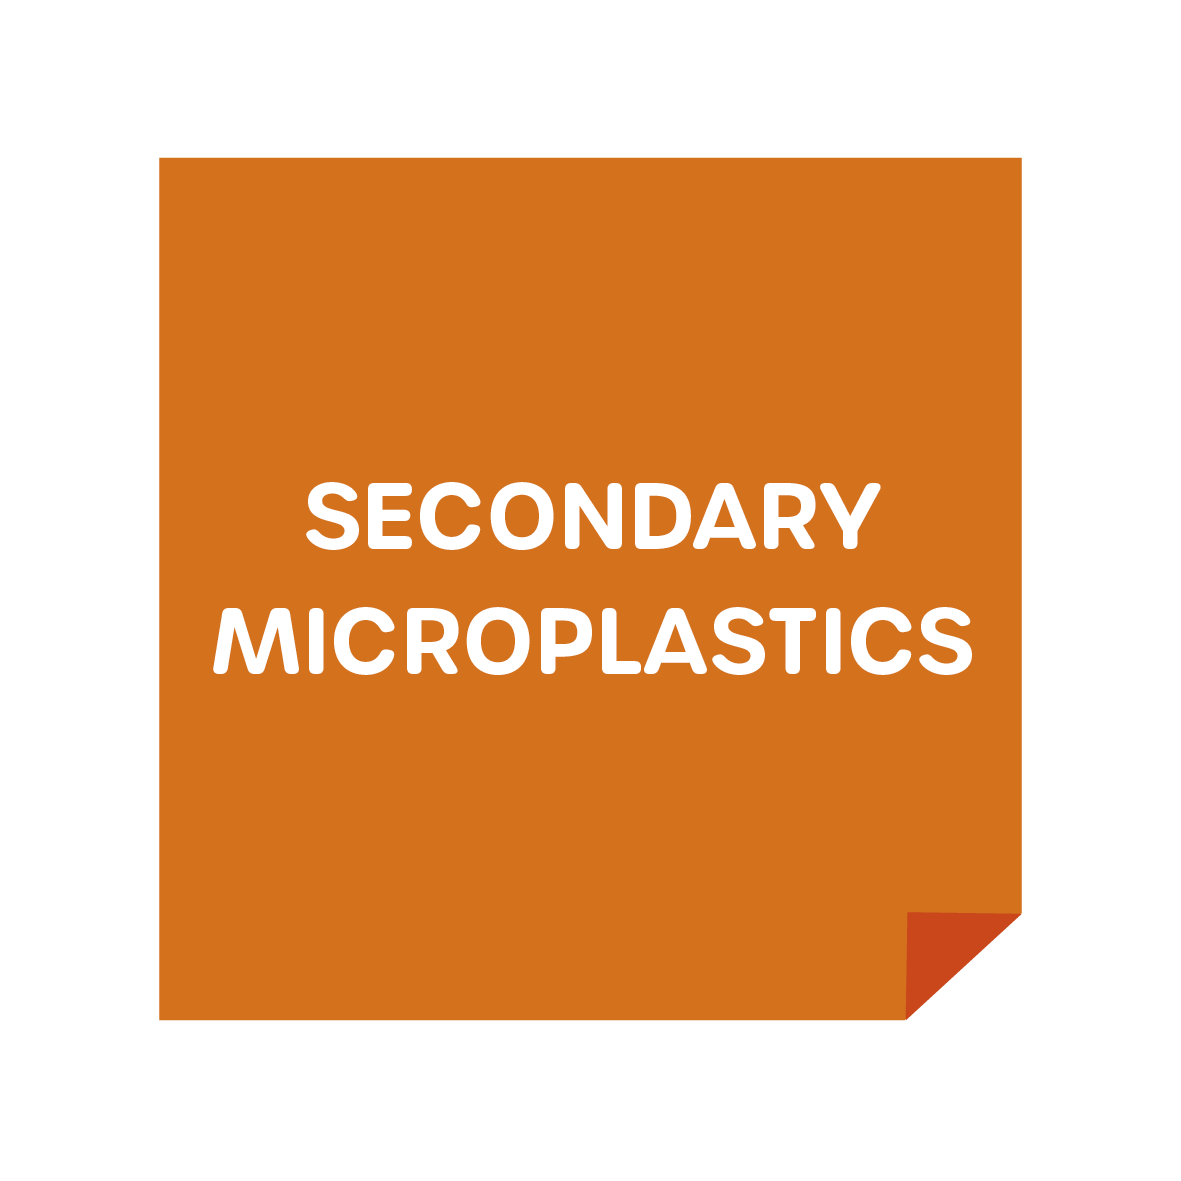 Secondary Microplastics